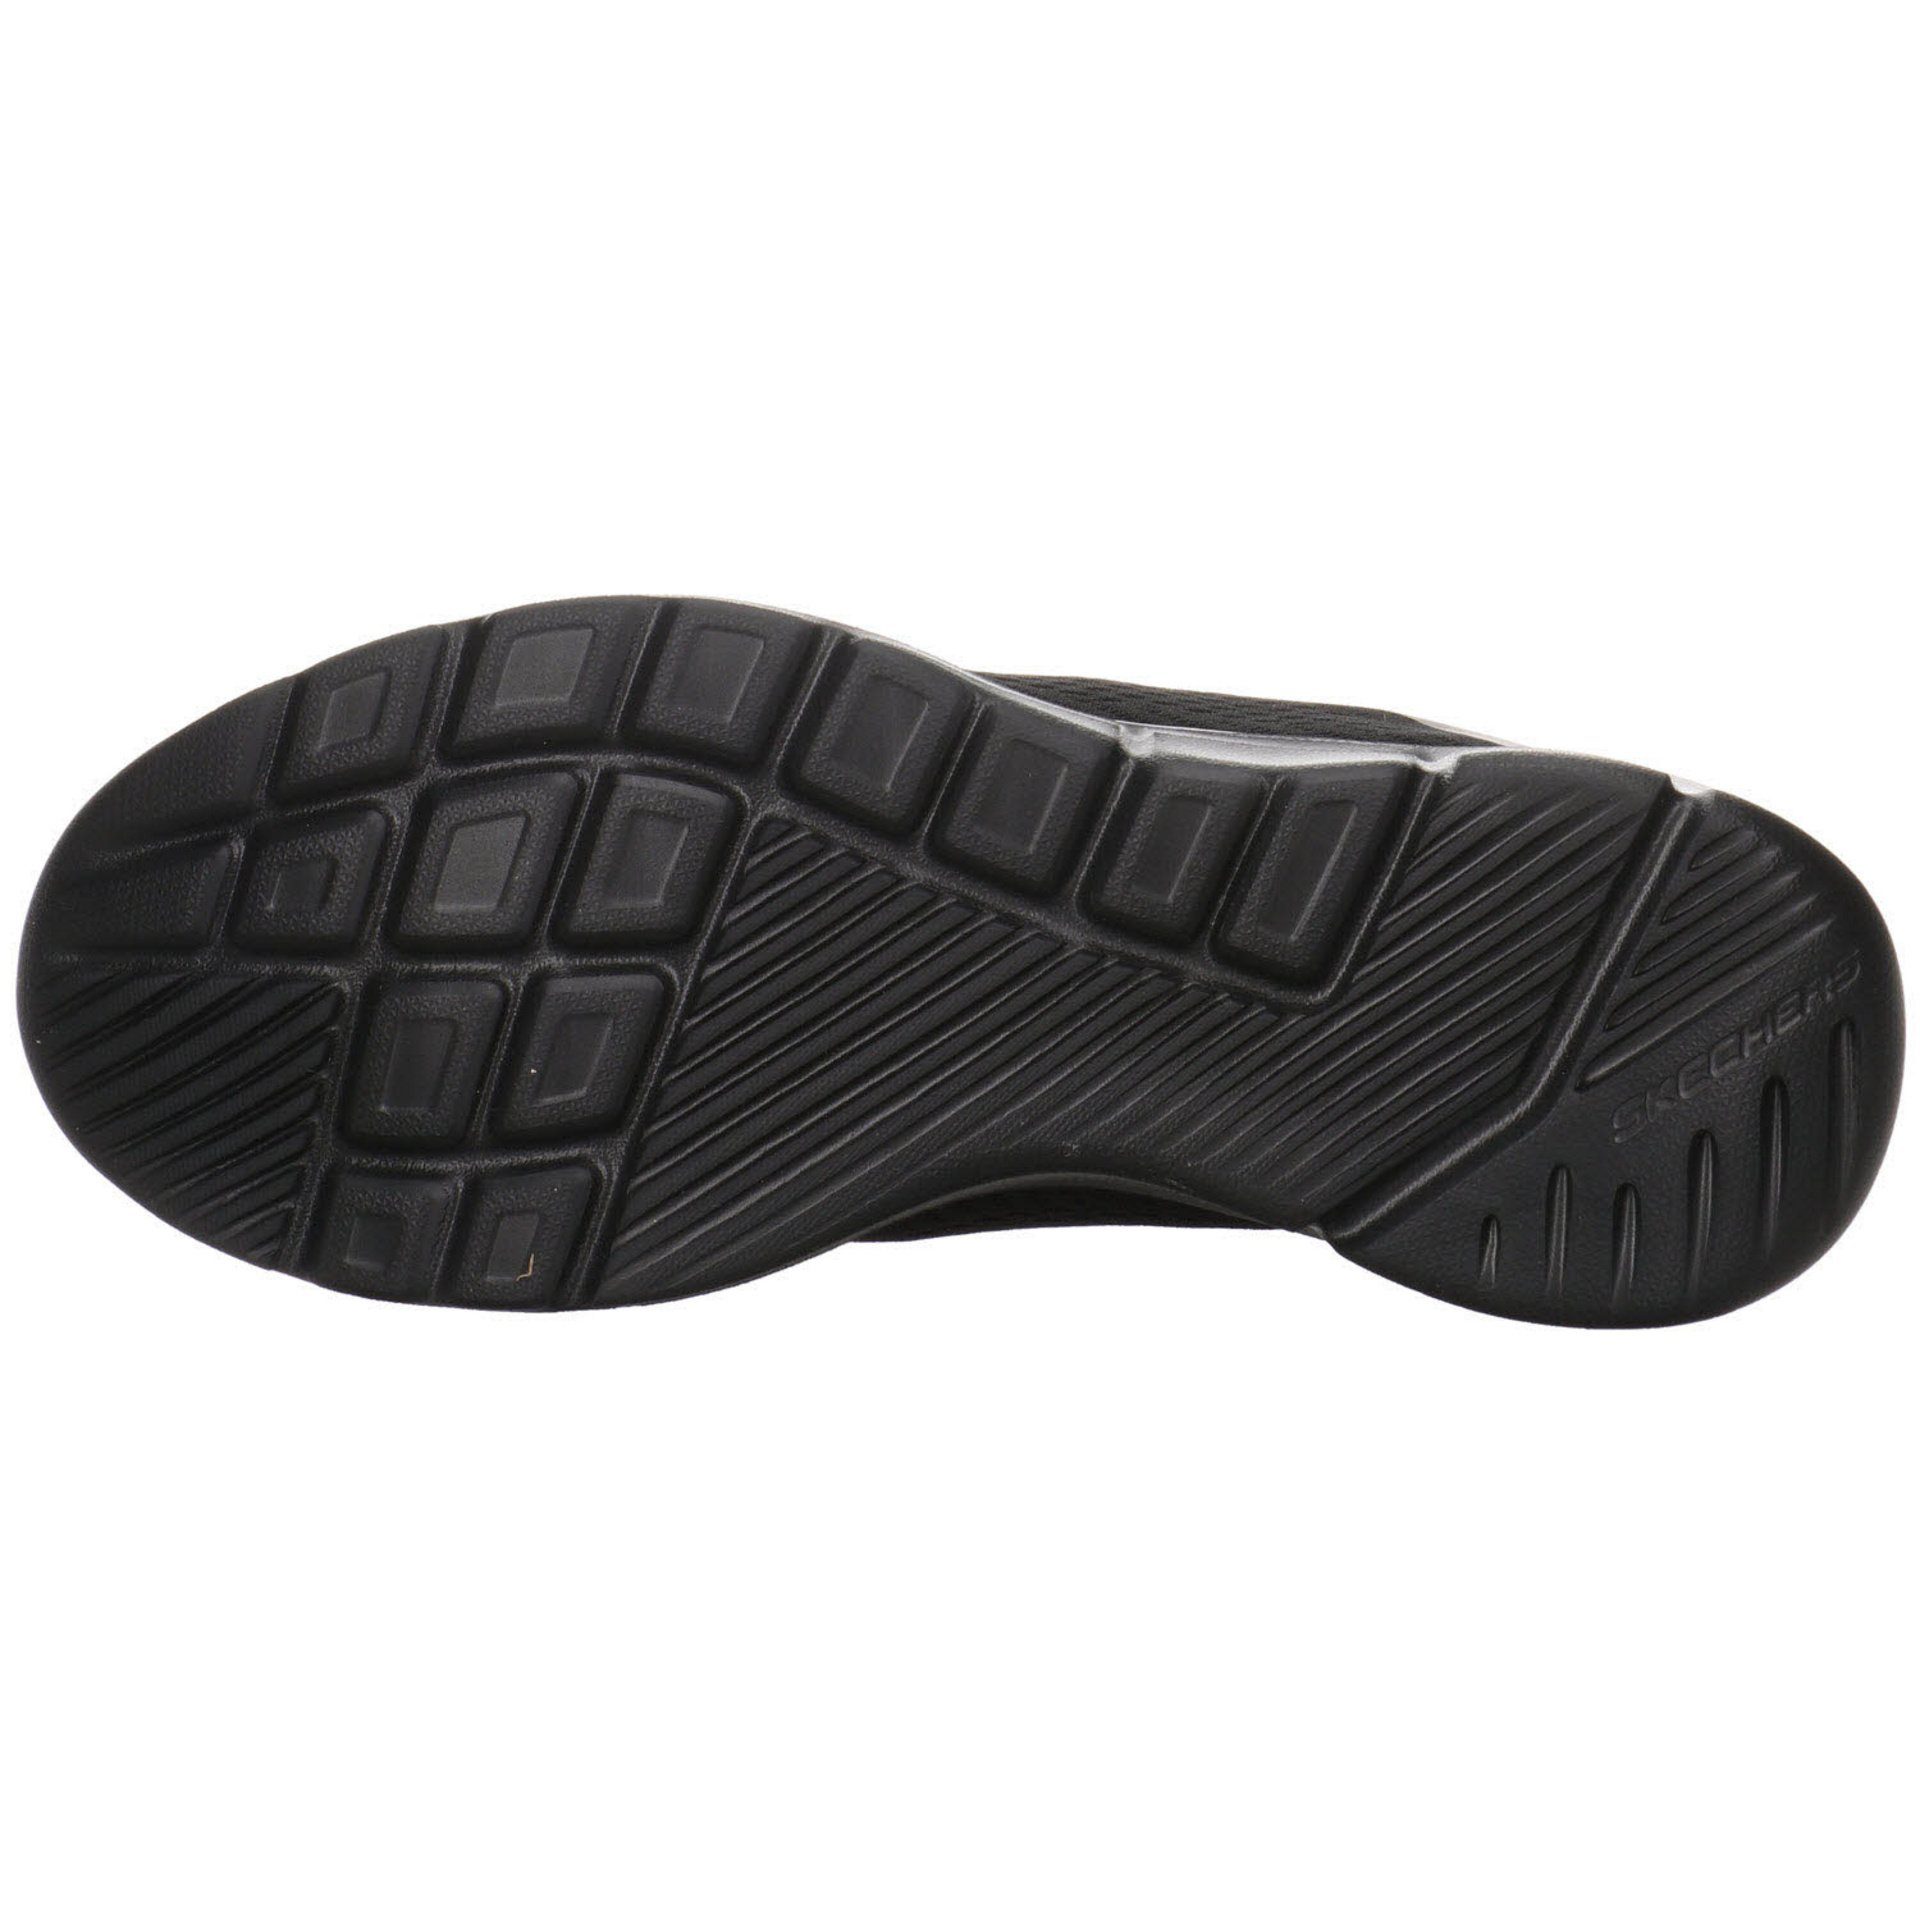 Sneaker Textil Fit-Equalizer Skechers Relaxed schwarz uni Textil Sneaker 3.0